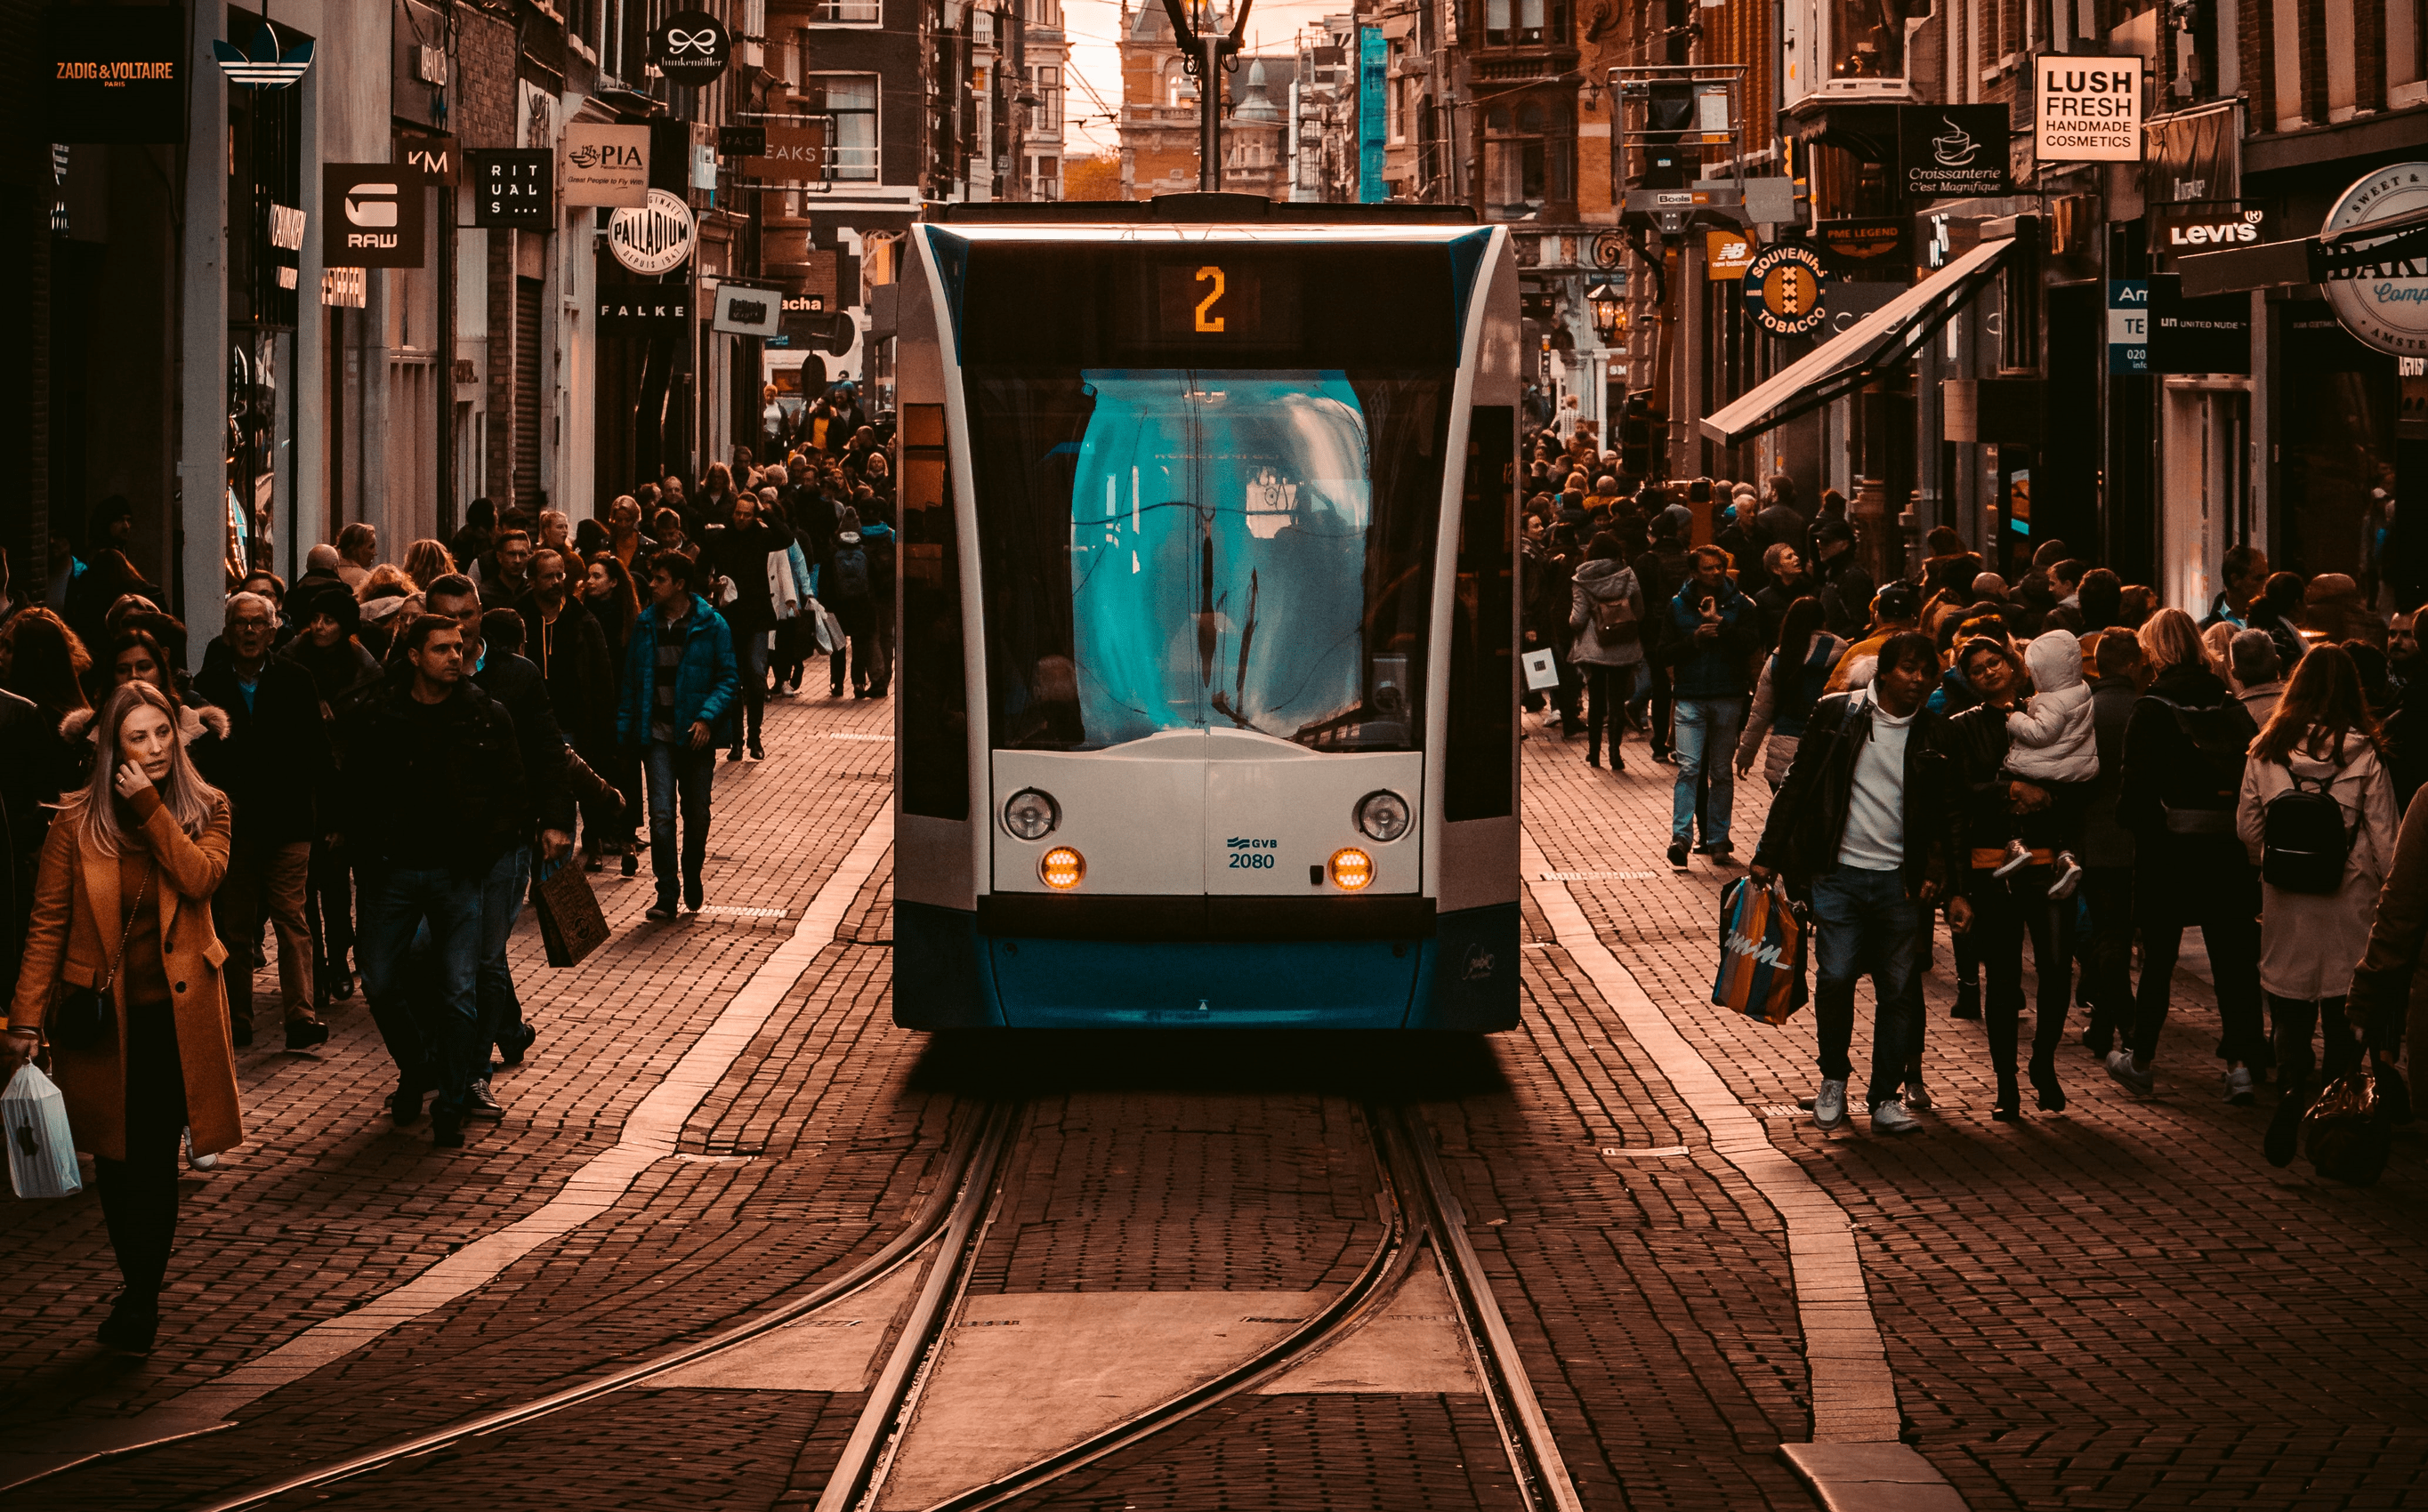 Amsterdam-2